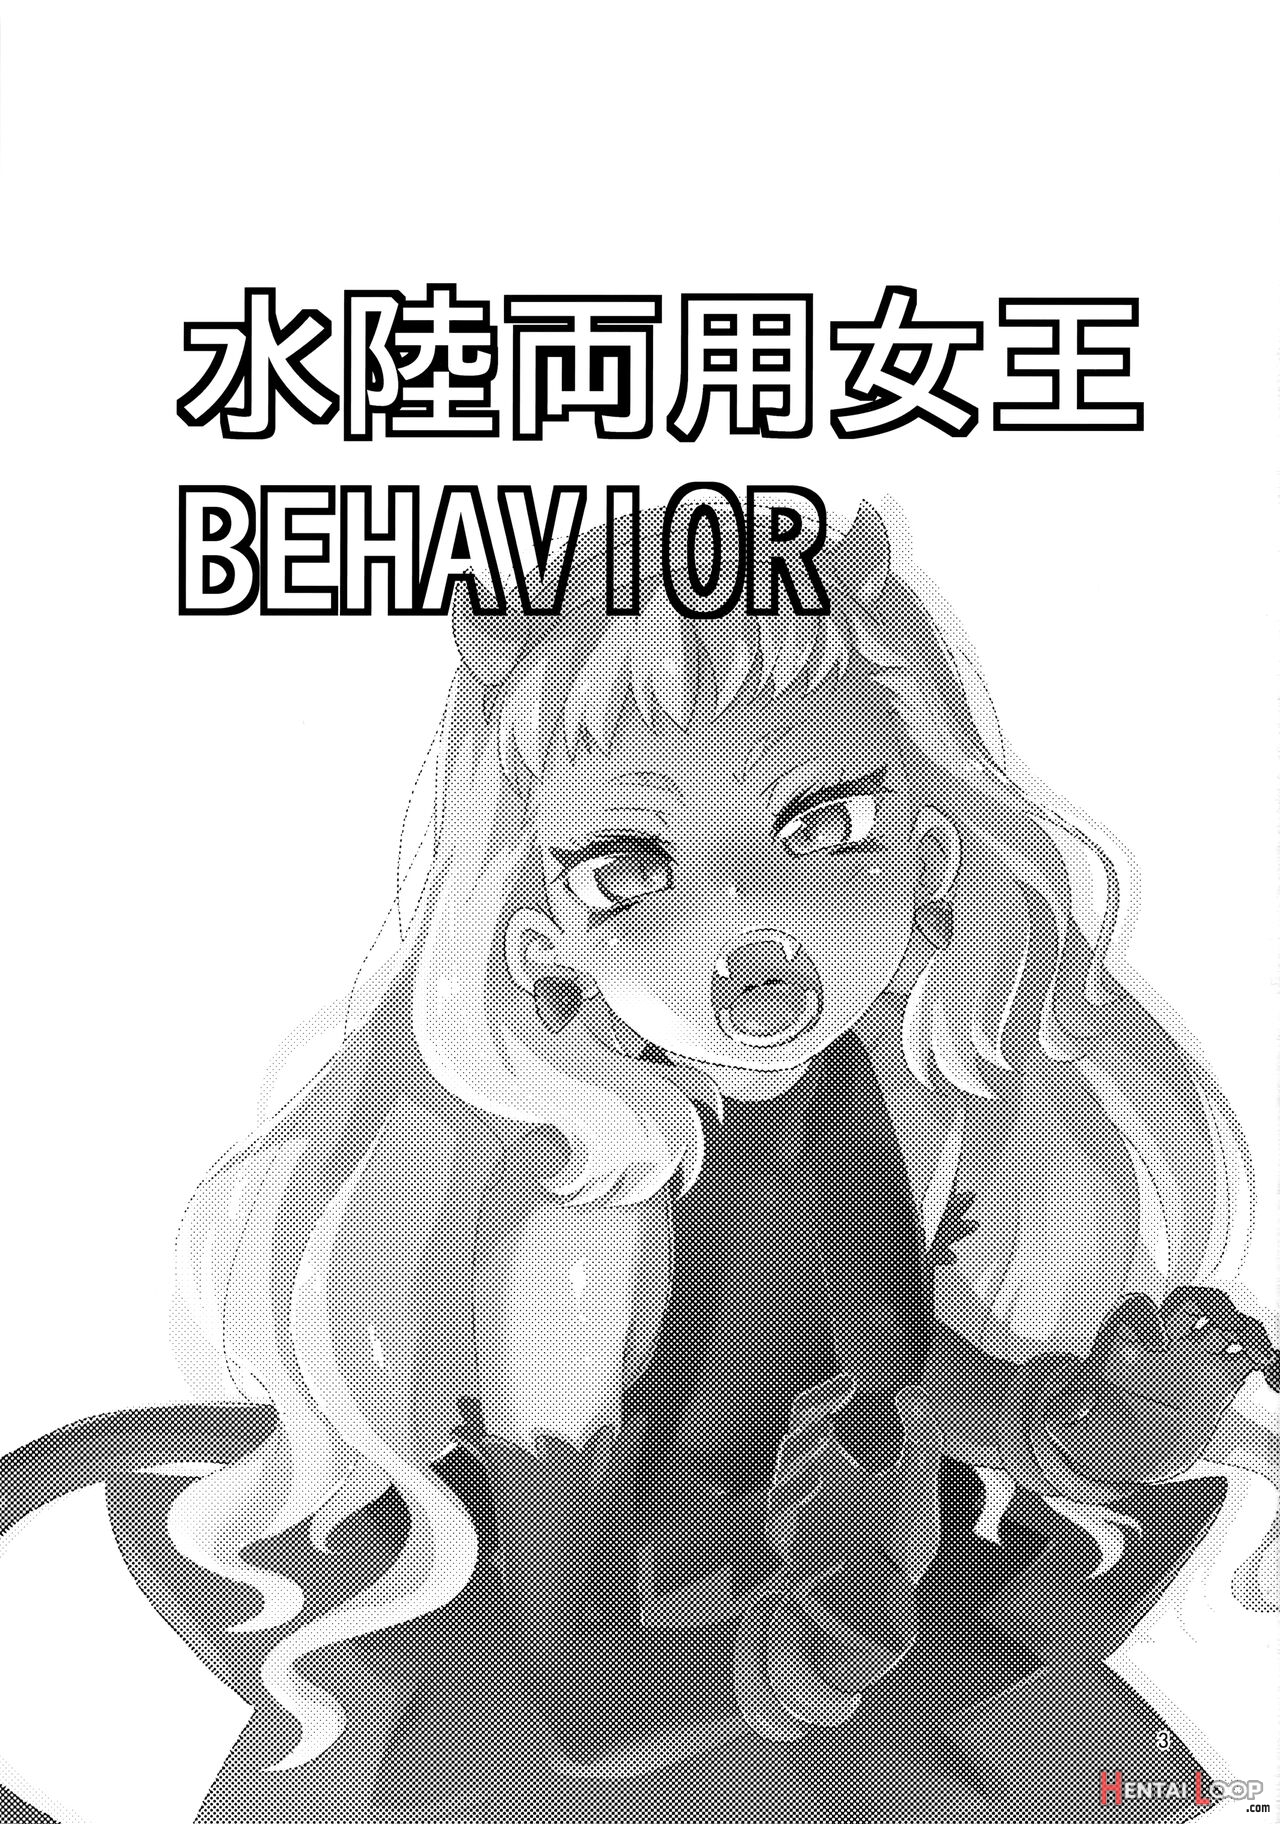 Suiriku Ryouyou Joou Behavior page 2